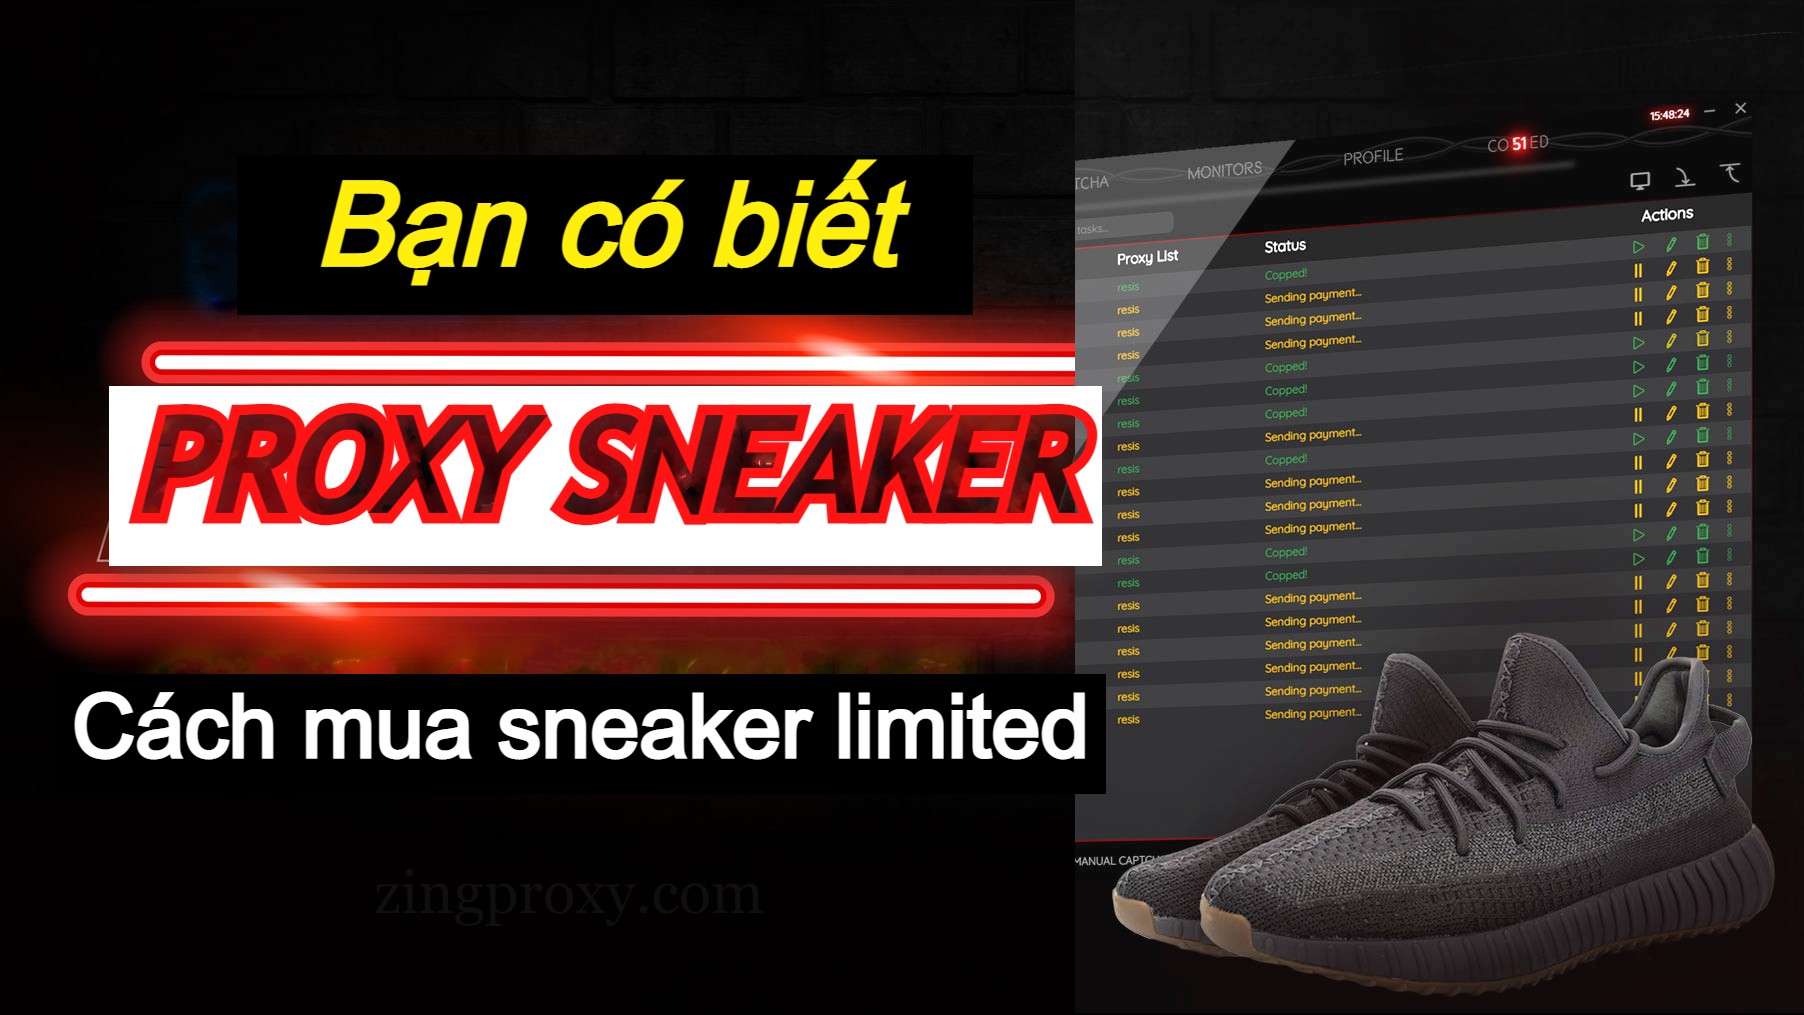 Proxy Sneaker là gì - Tại sao nên sử dụng Proxy Sneaker